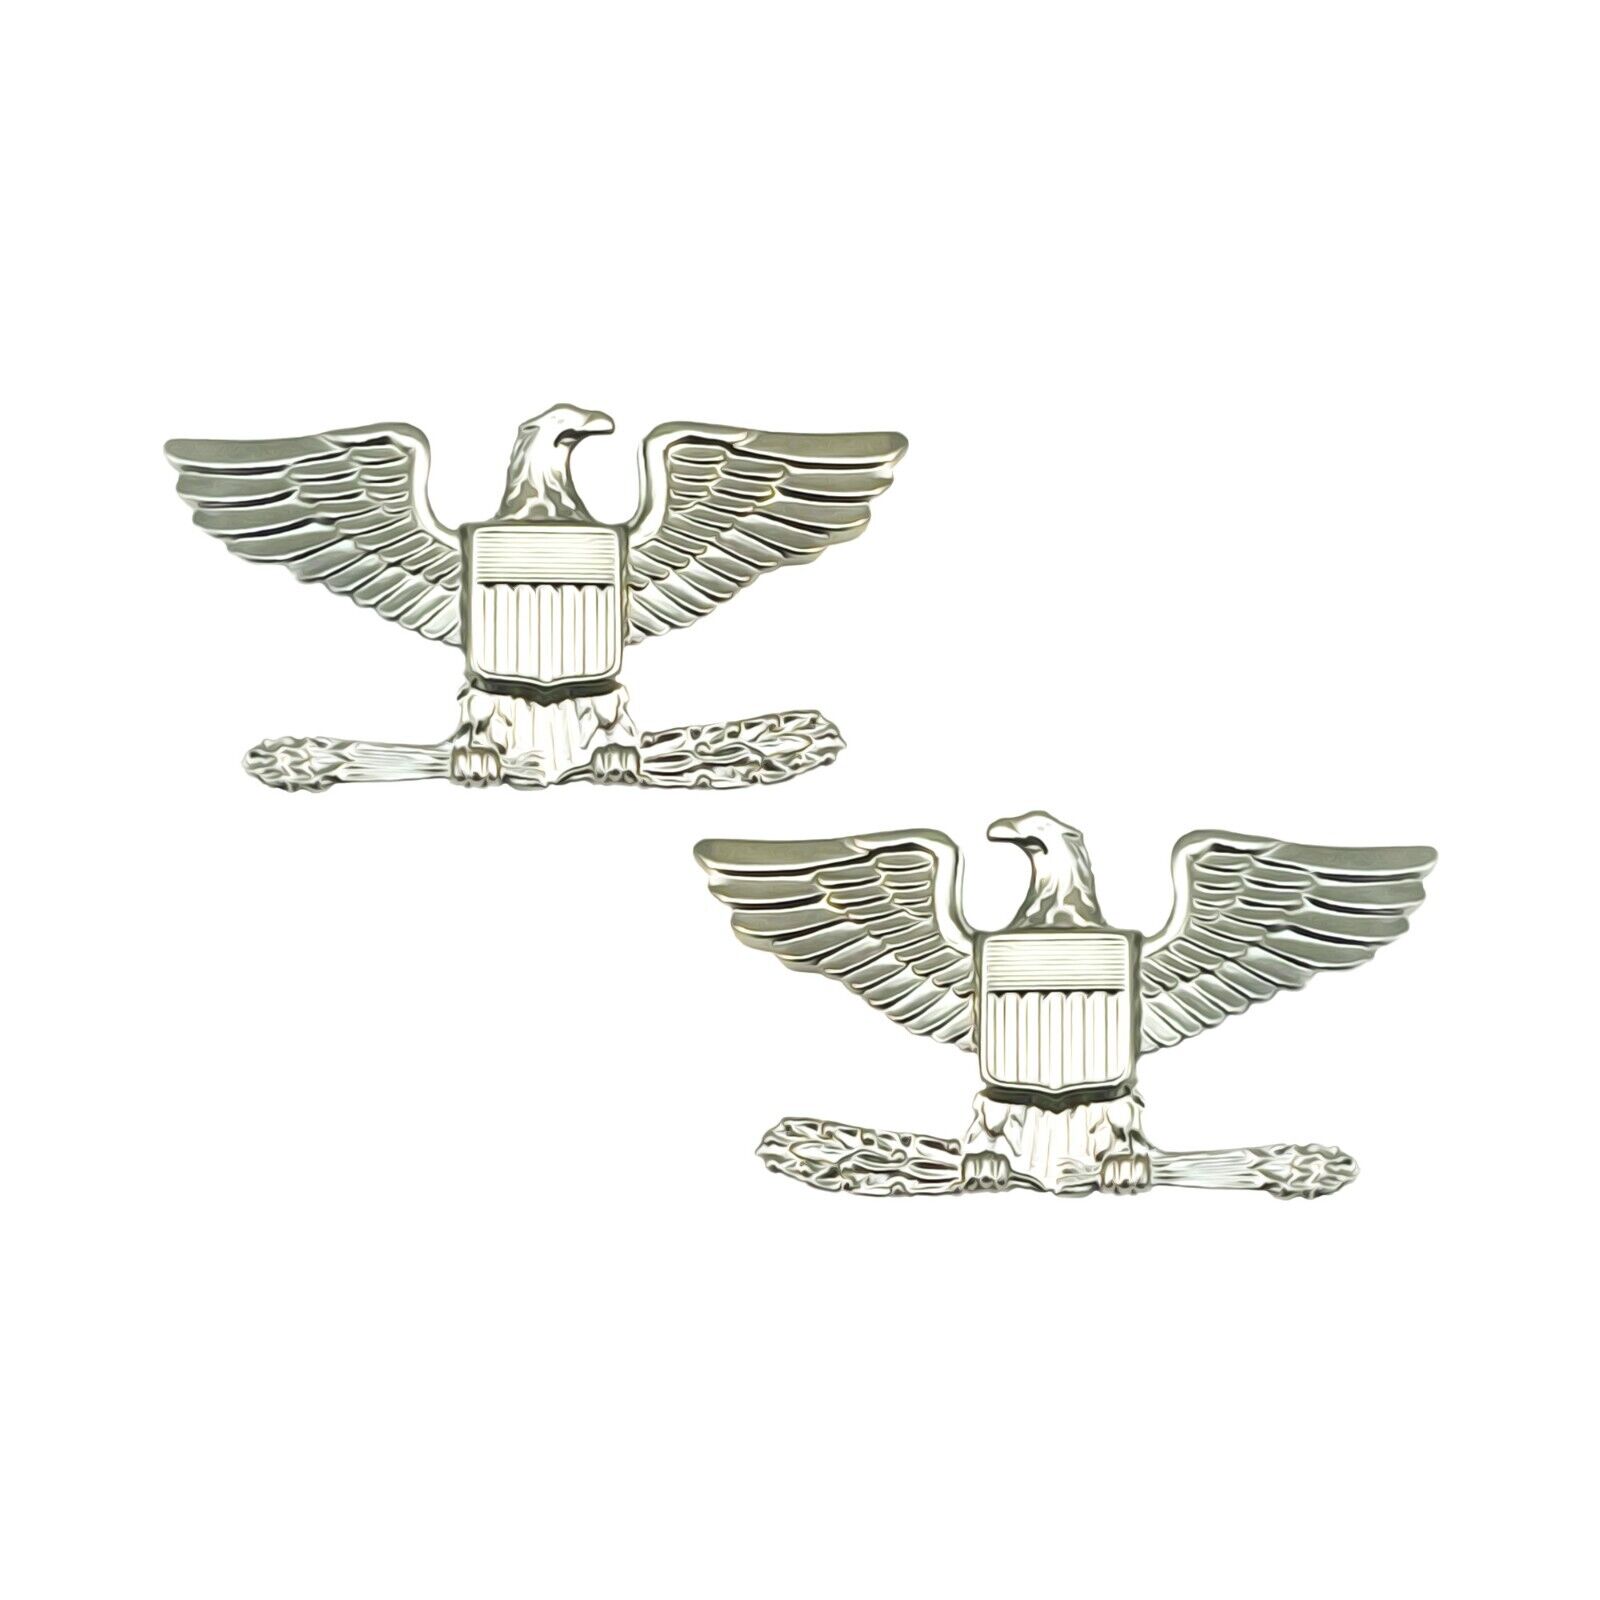 Colonel BRITE Rank U.S. Army (pair)